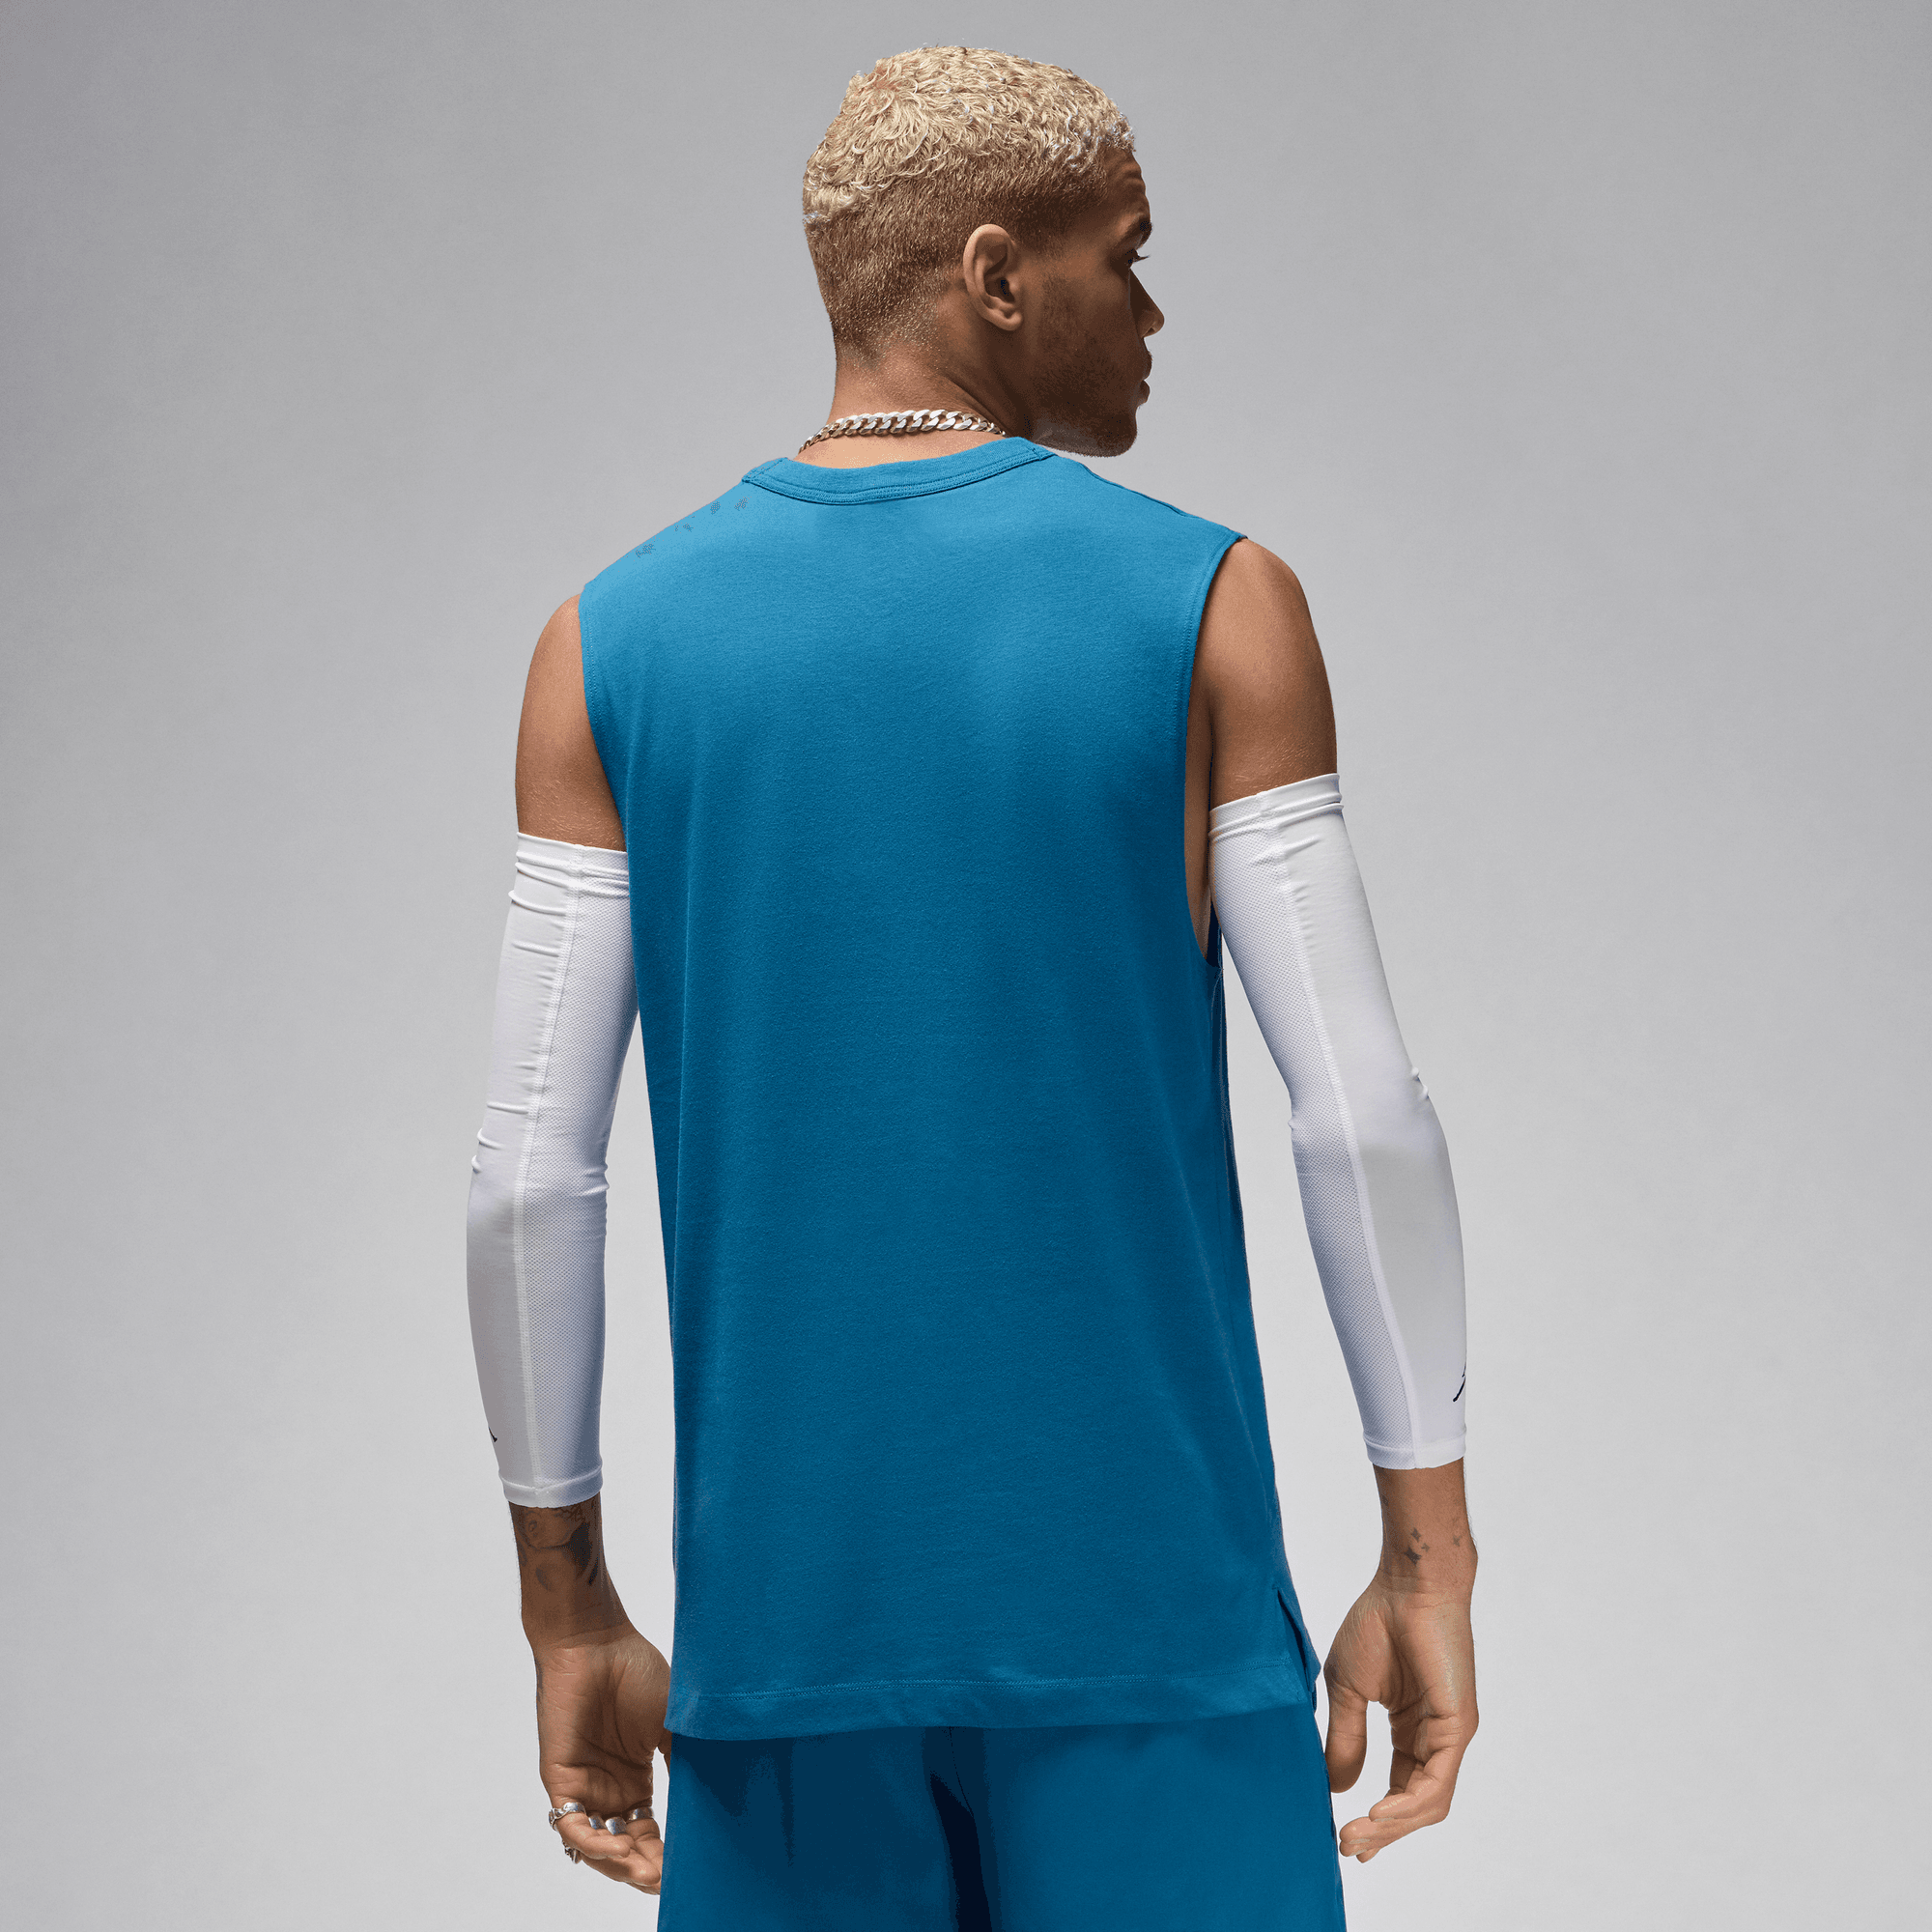 NIKE Polyester singlet shirt sleeveless shirts Training Gear Sport Wear Men  Shirt Baju Lelaki TRANSPARENT LOGO